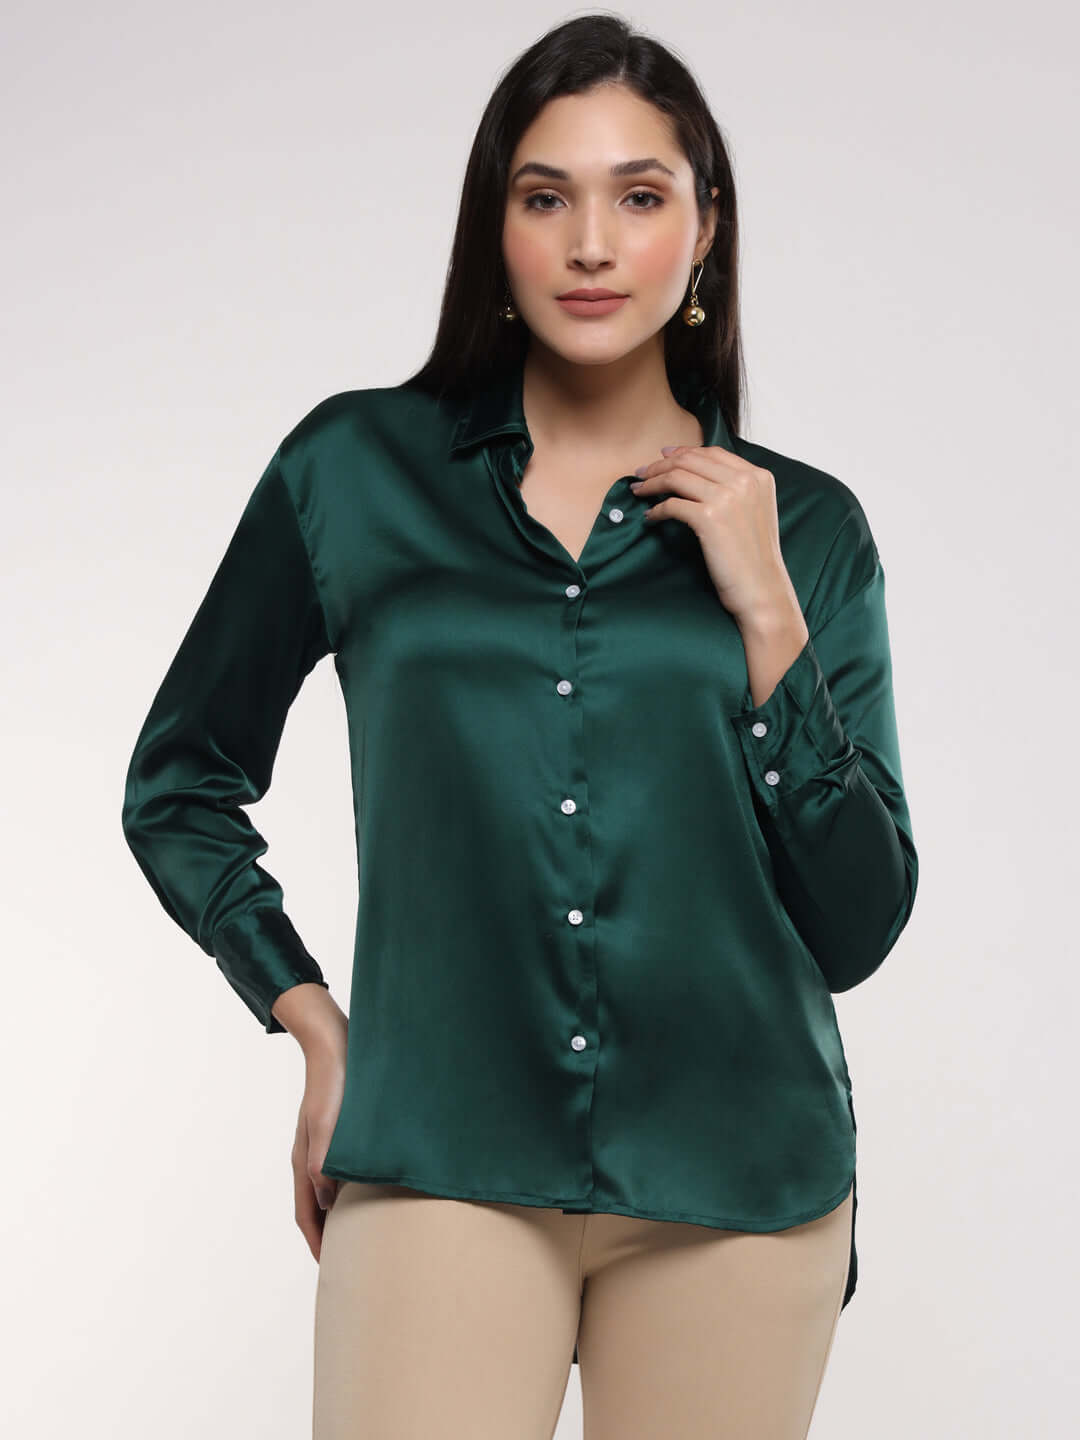 Women's Premium Emerald green Satin Shirt